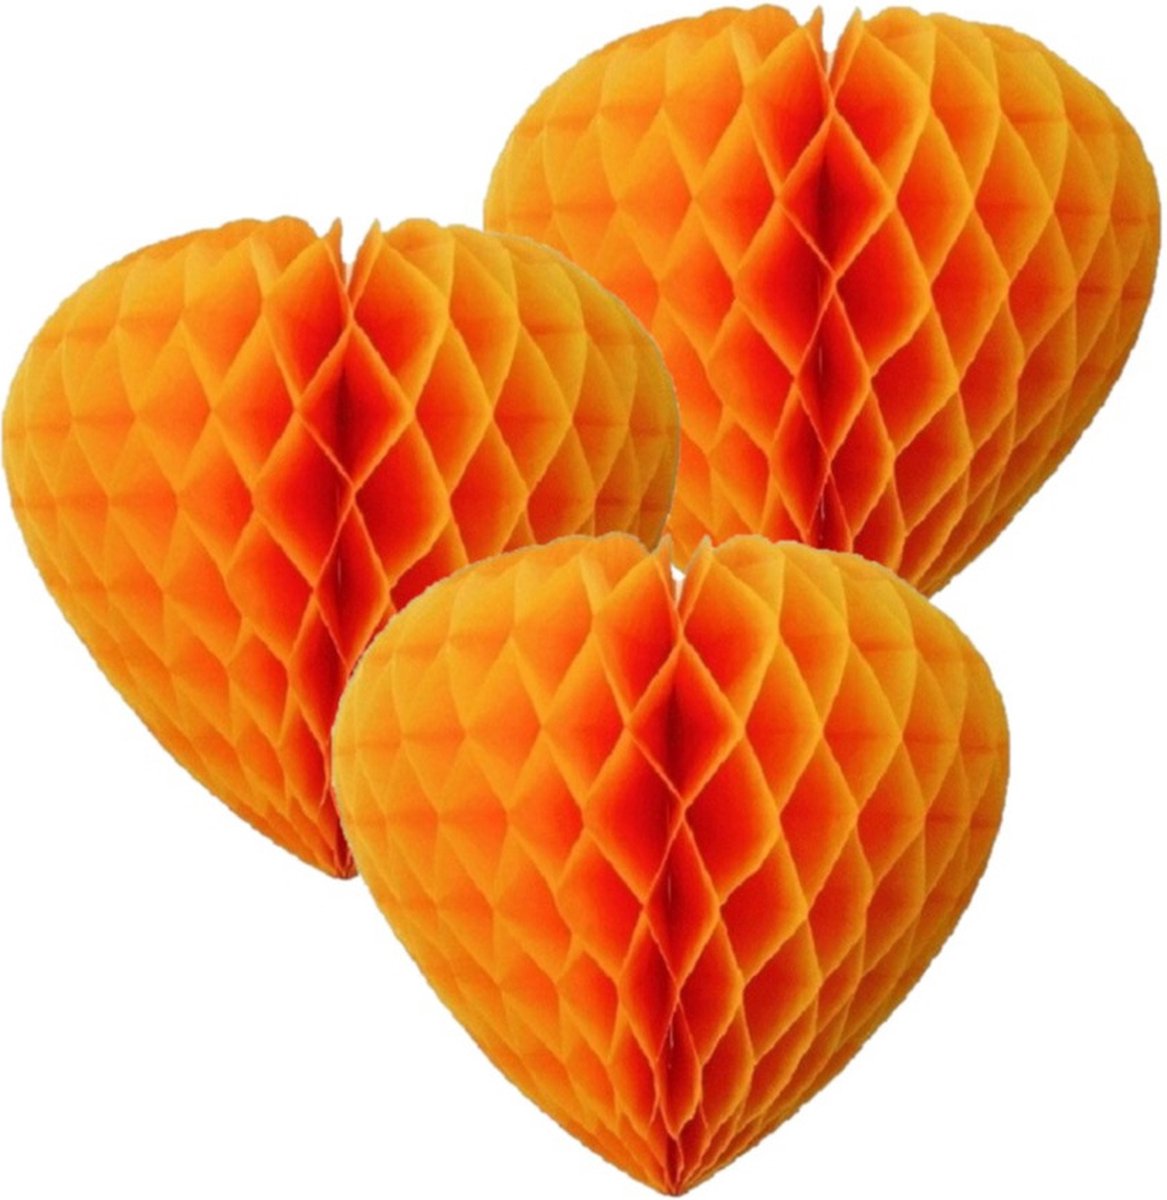 Set van 3x stuks oranje feestversiering decoratie hart 30 cm van papier - Koningsdag/ek/wk/oranje feest